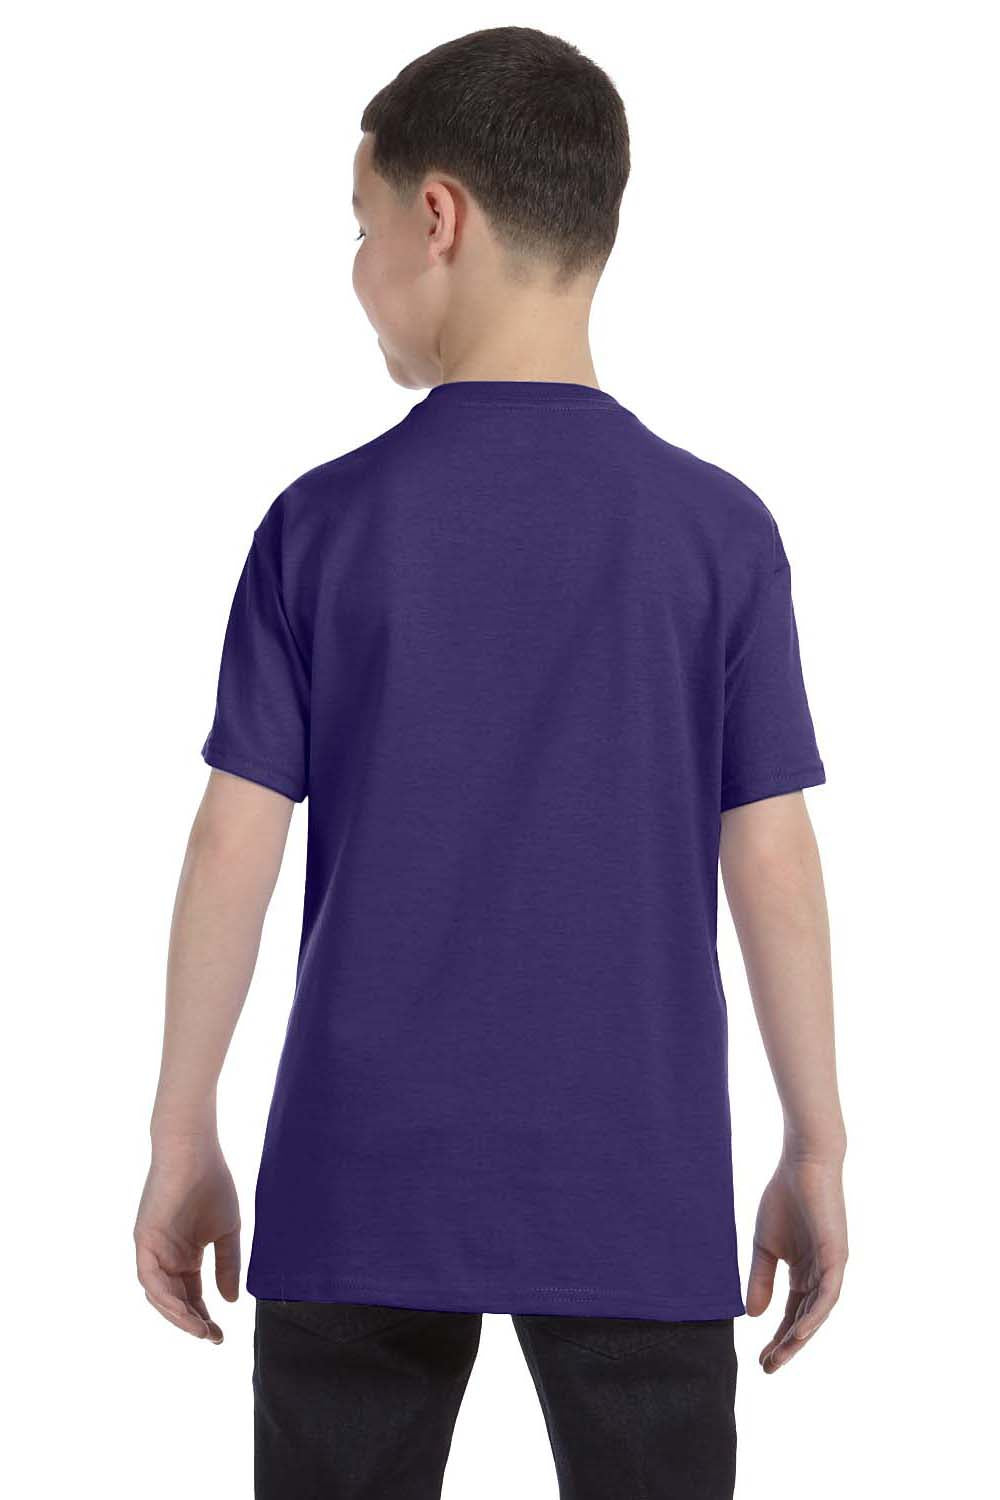 Jerzees 29B Youth Dri-Power Moisture Wicking Short Sleeve Crewneck T-Shirt Purple Back